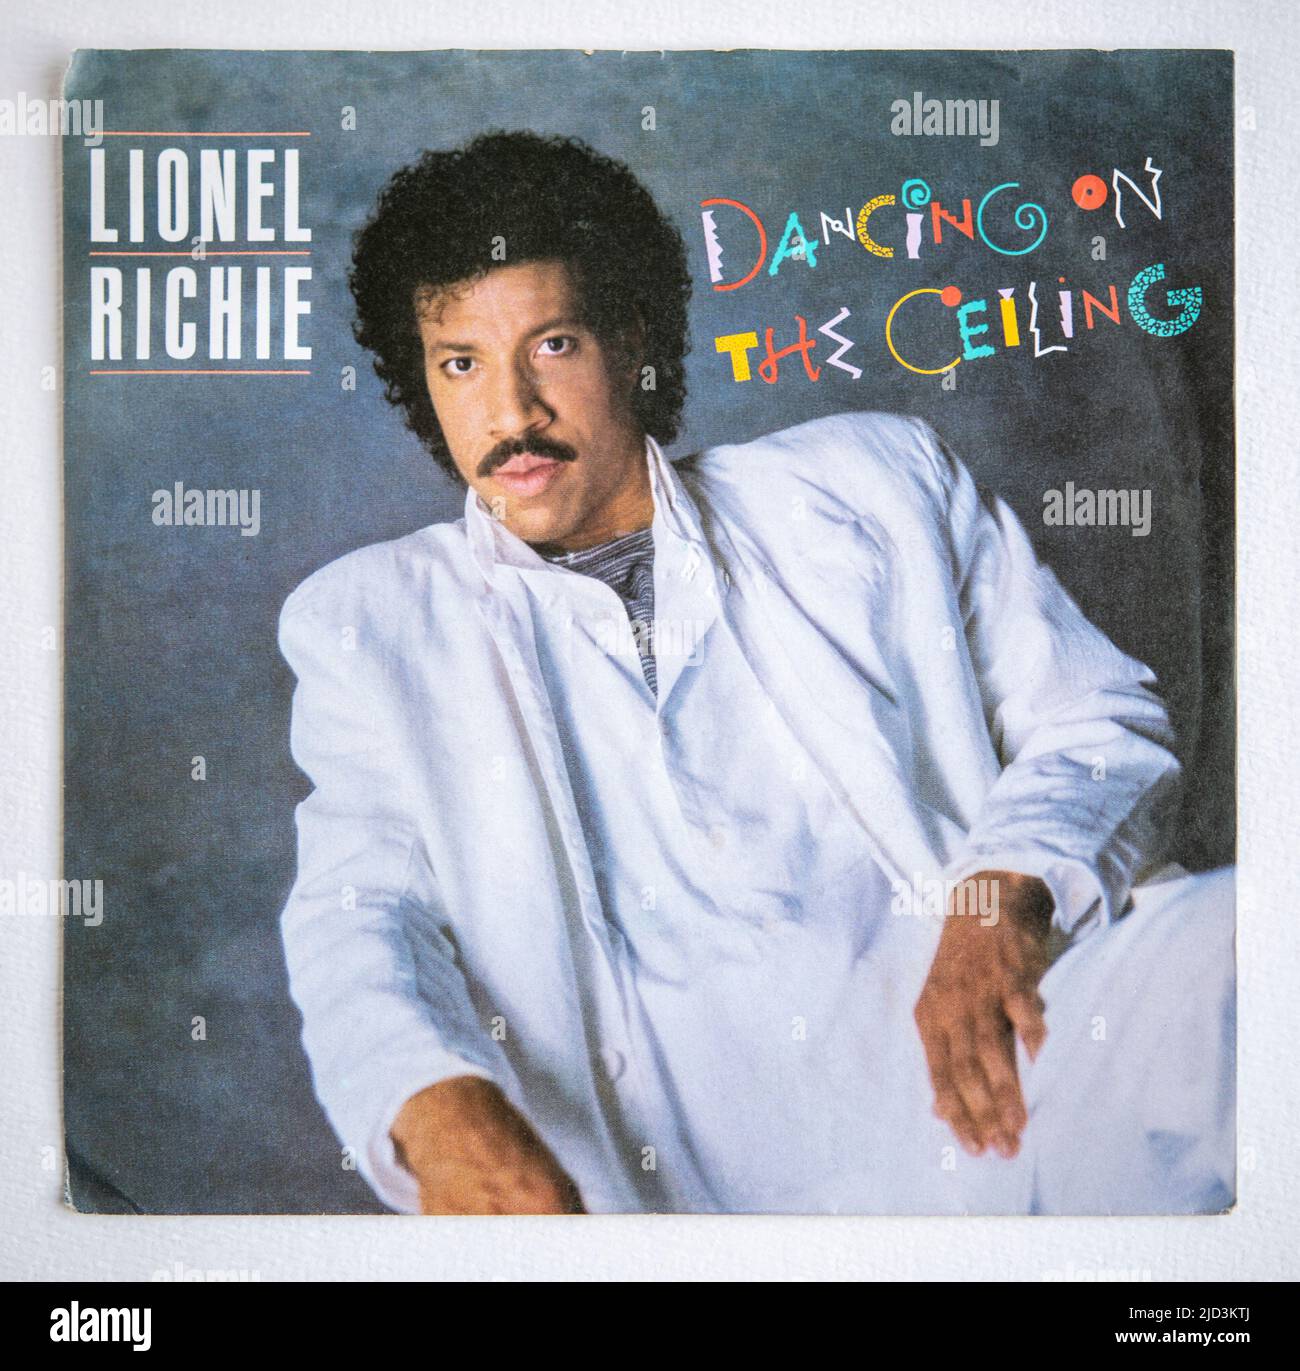 Lionel Richie – Dancing on the Ceiling - vintage vinyl cover album (Front  Stock Photo - Alamy